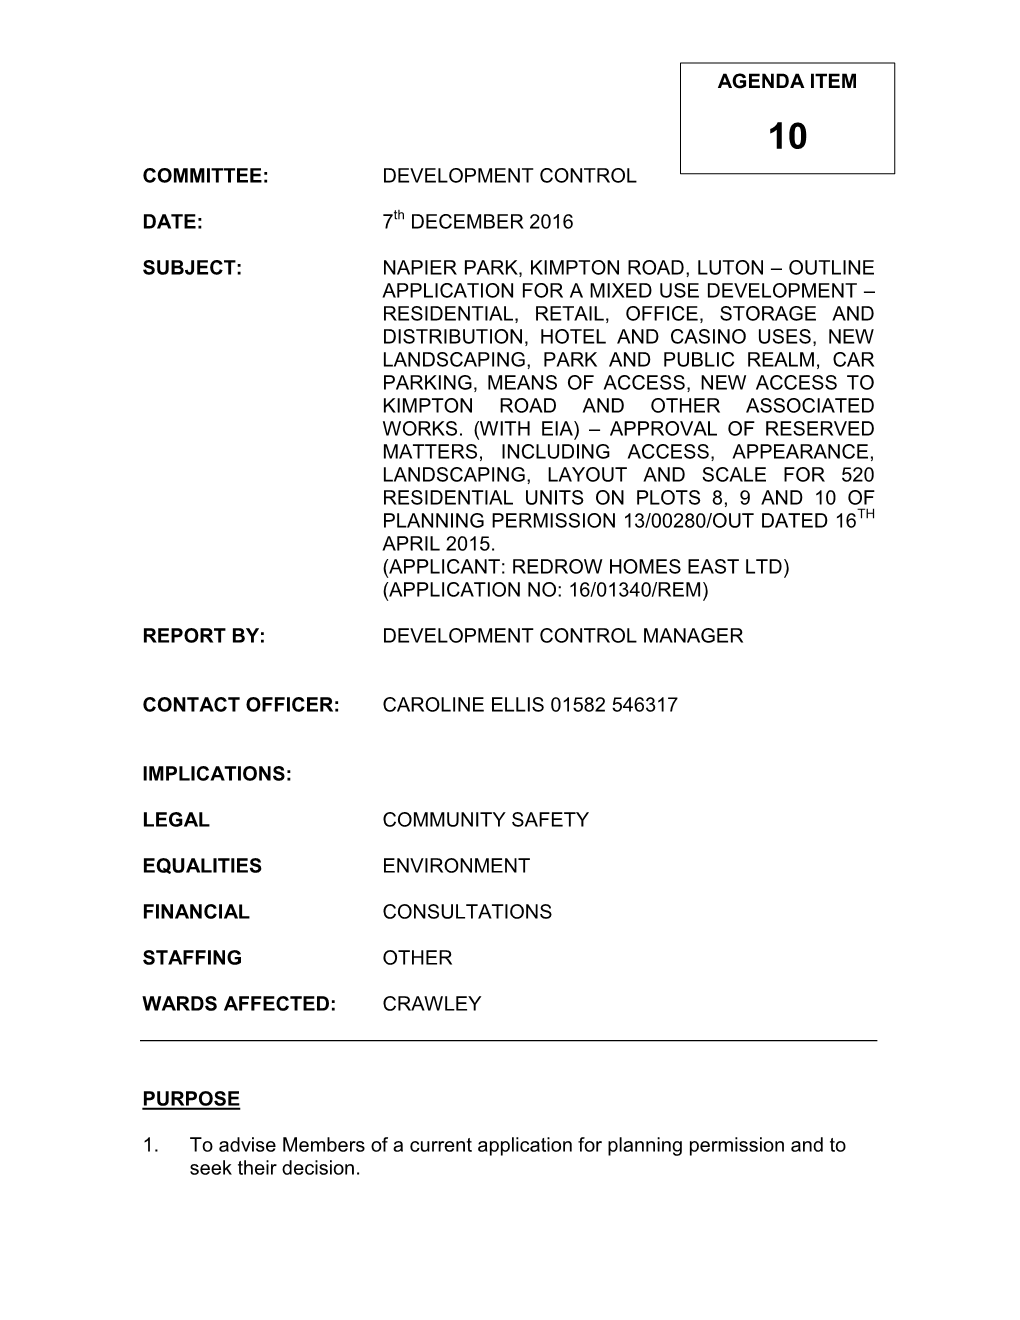 Committee: Development Control Date: 7 December 2016 Subject: Napier Park, Kimpton Road, Luton – Outline Application for a Mi